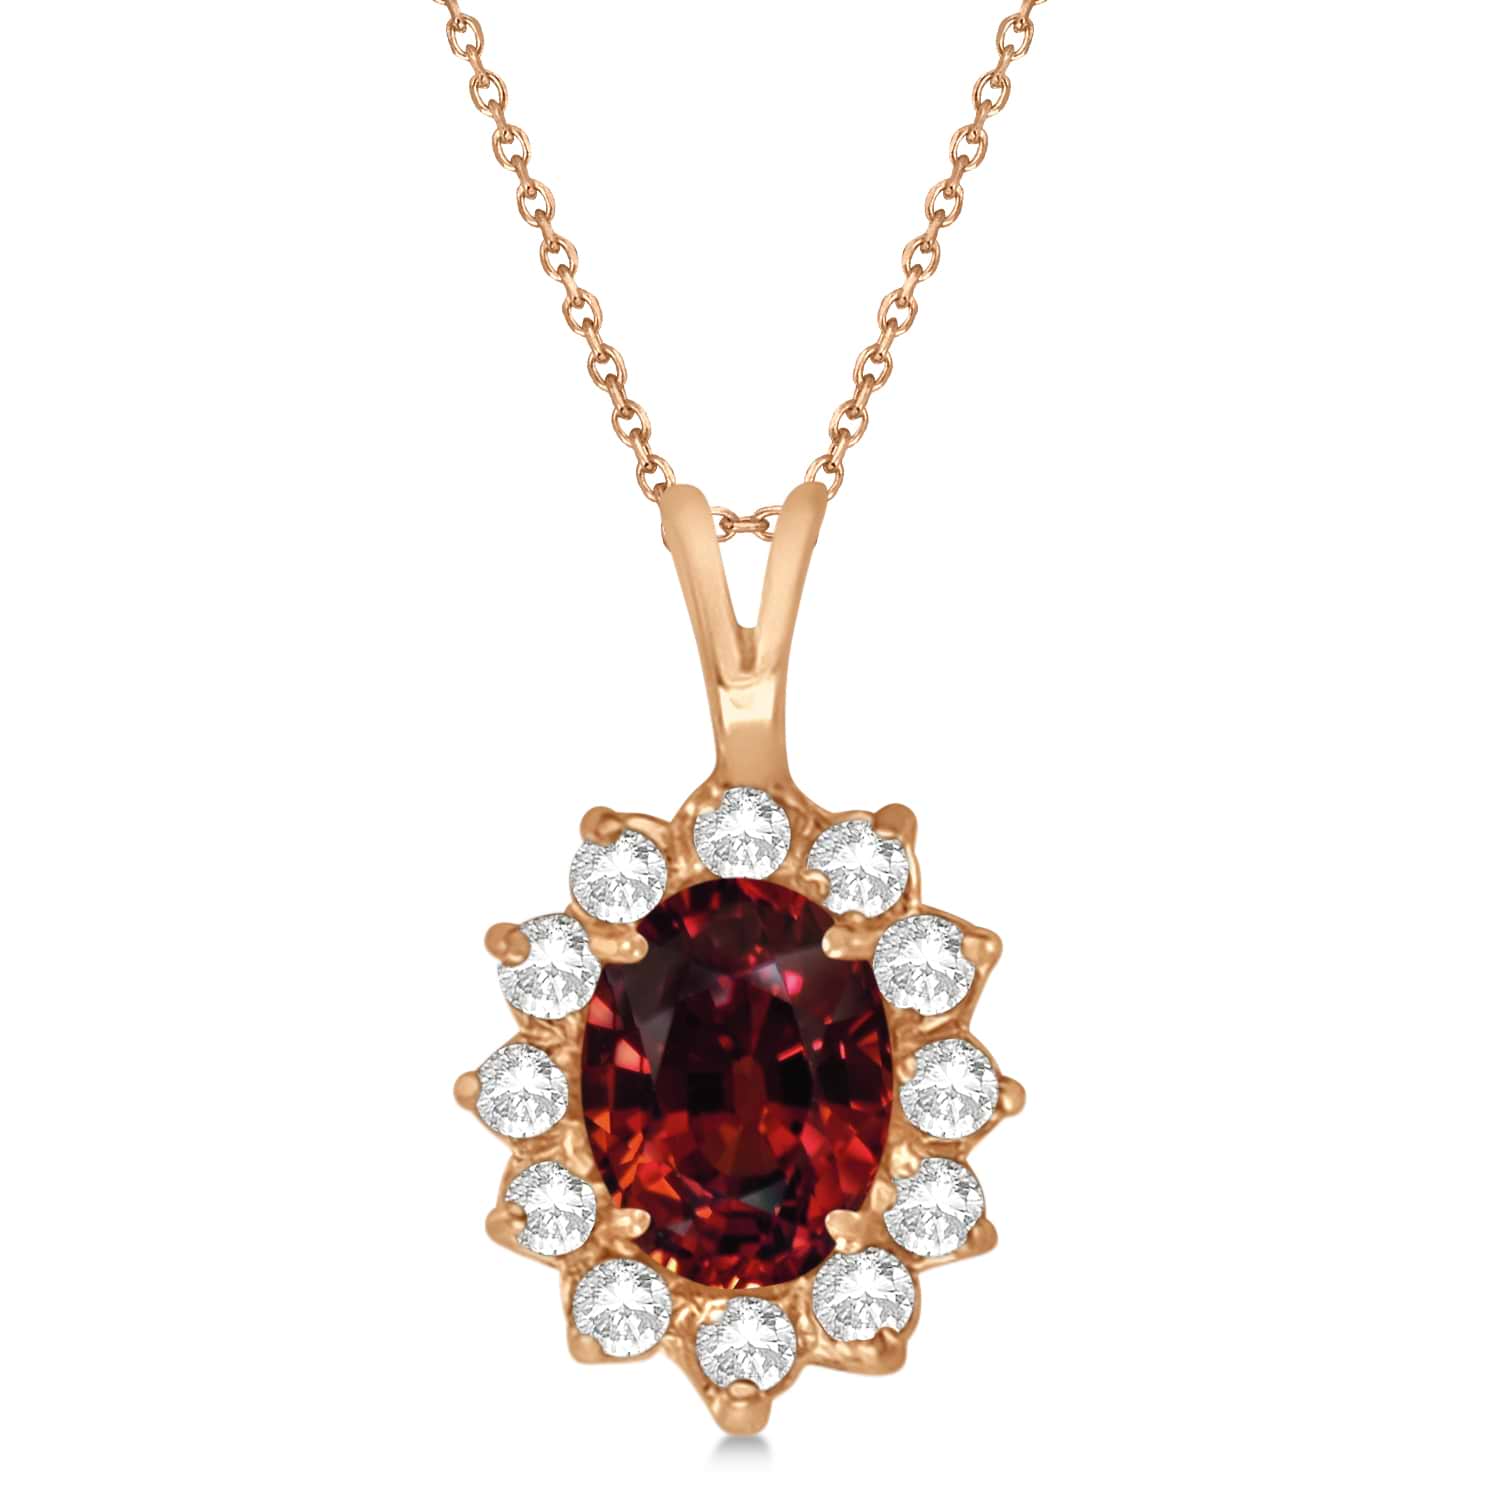 Garnet & Diamond Accented Pendant Necklace 14k Rose Gold (1.70ctw)